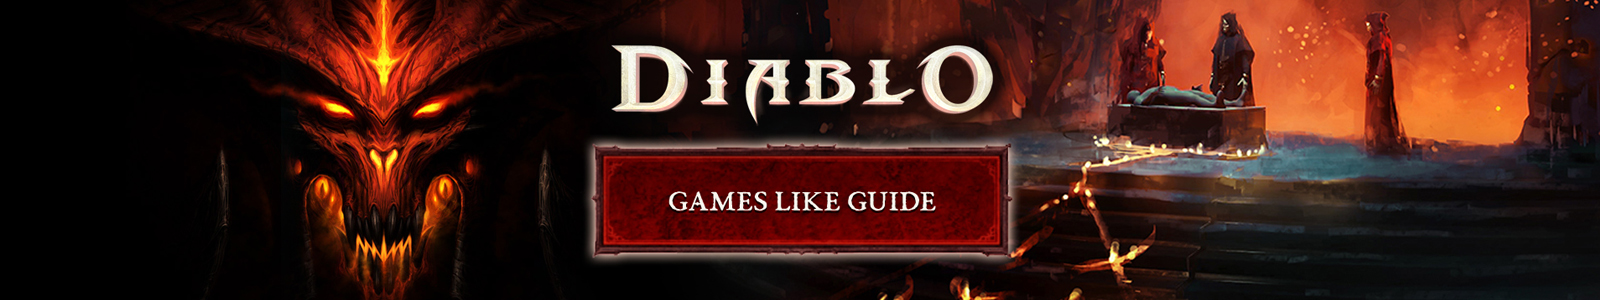 Diablo 4 games like guide